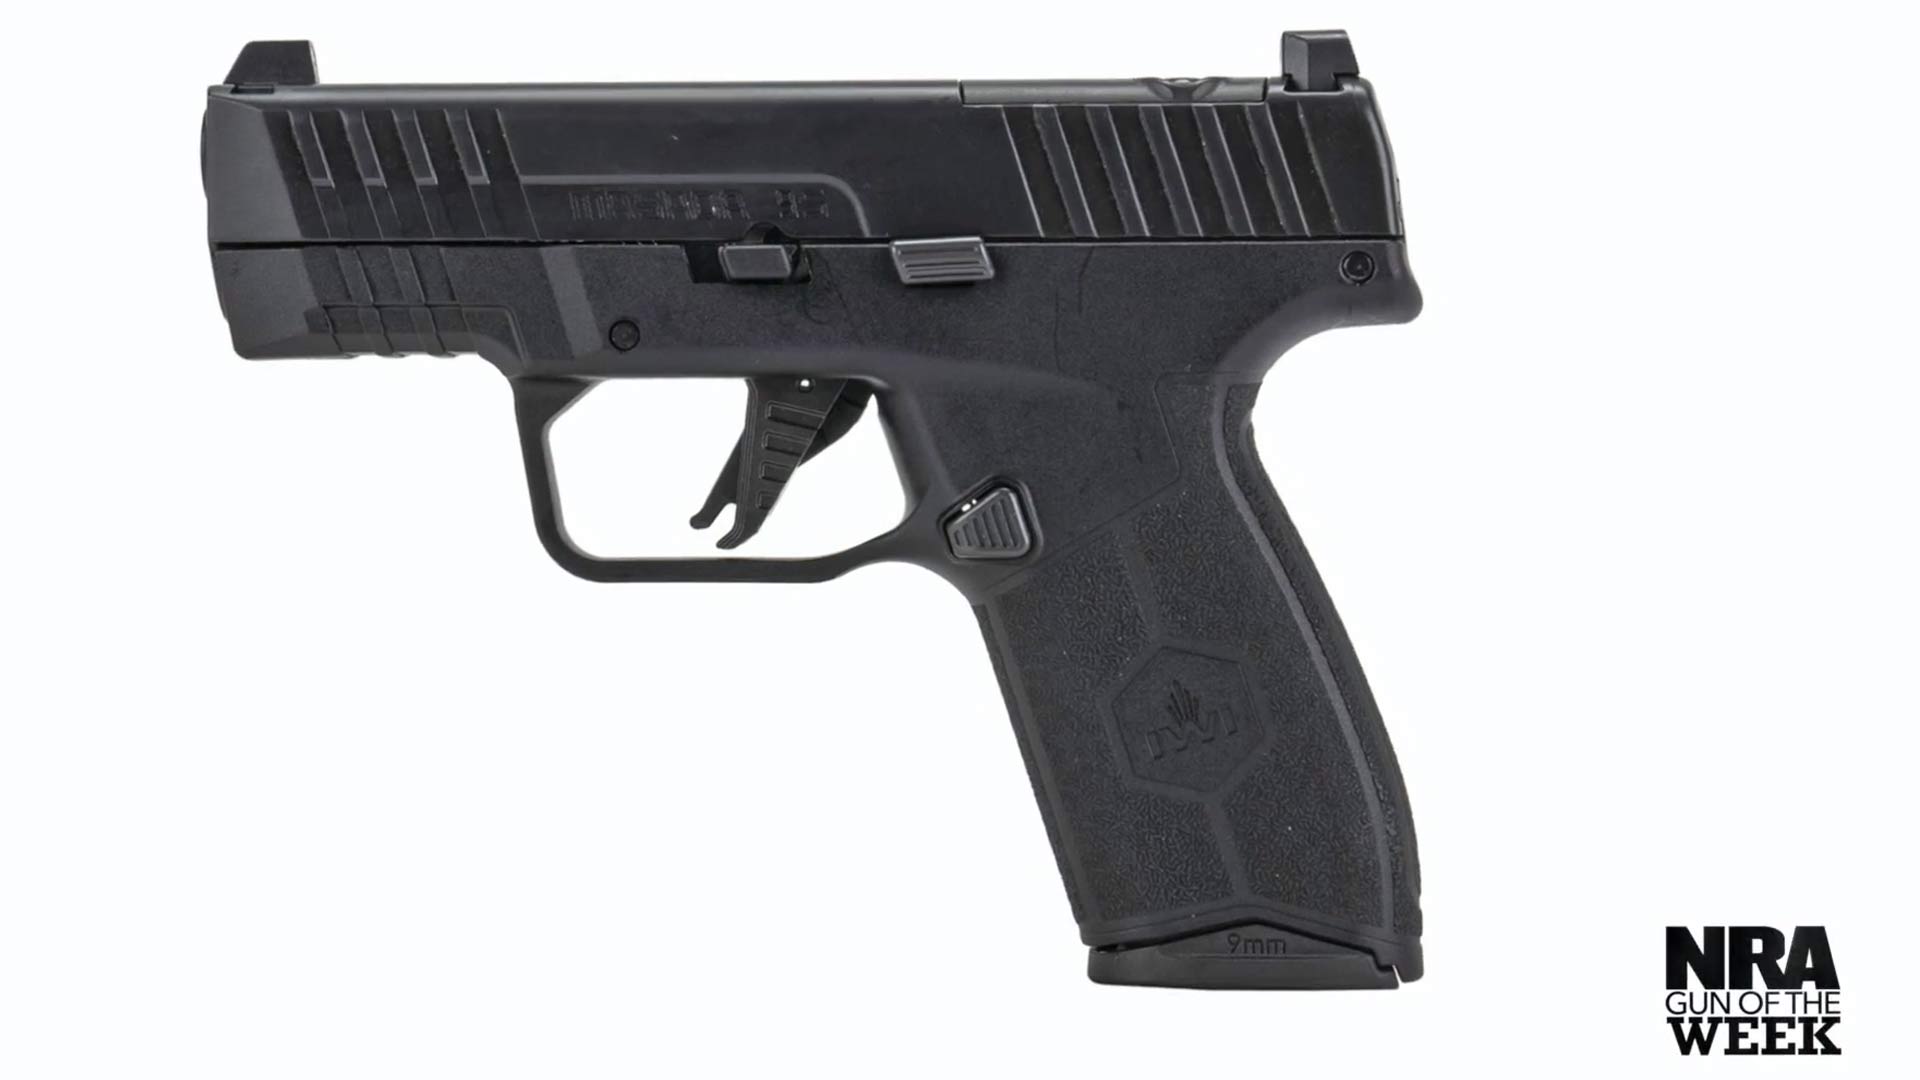 IWI Masada Slim left-side view black polymer-frame pistol 9 mm gun